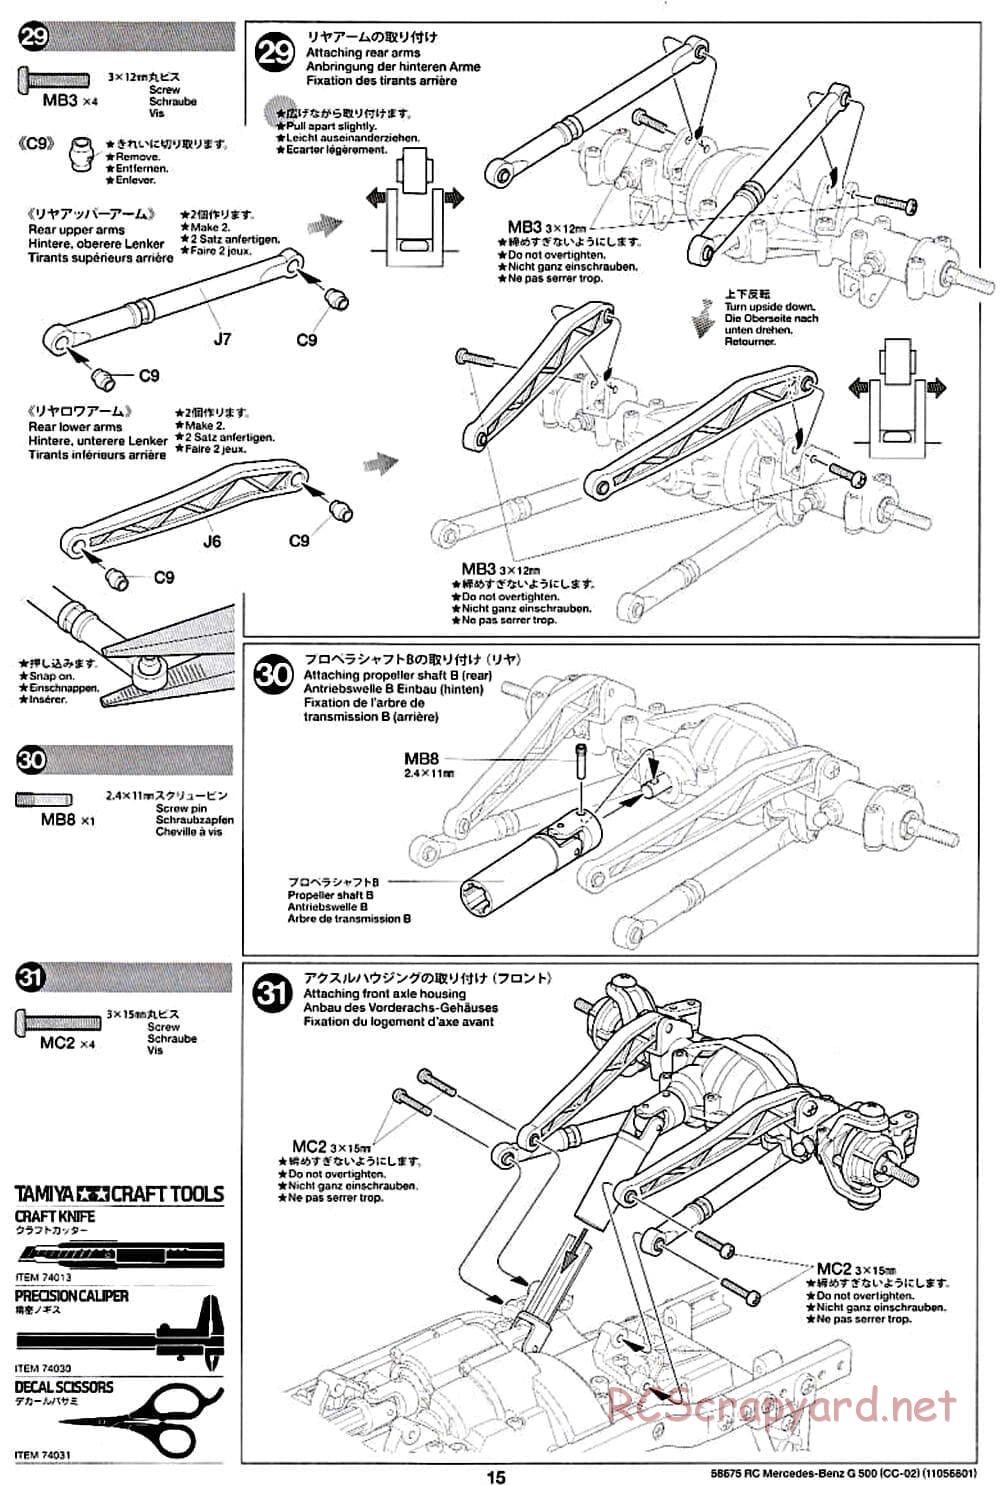 Tamiya - Mercedes-Benz G500 - CC-02 Chassis - Manual - Page 15